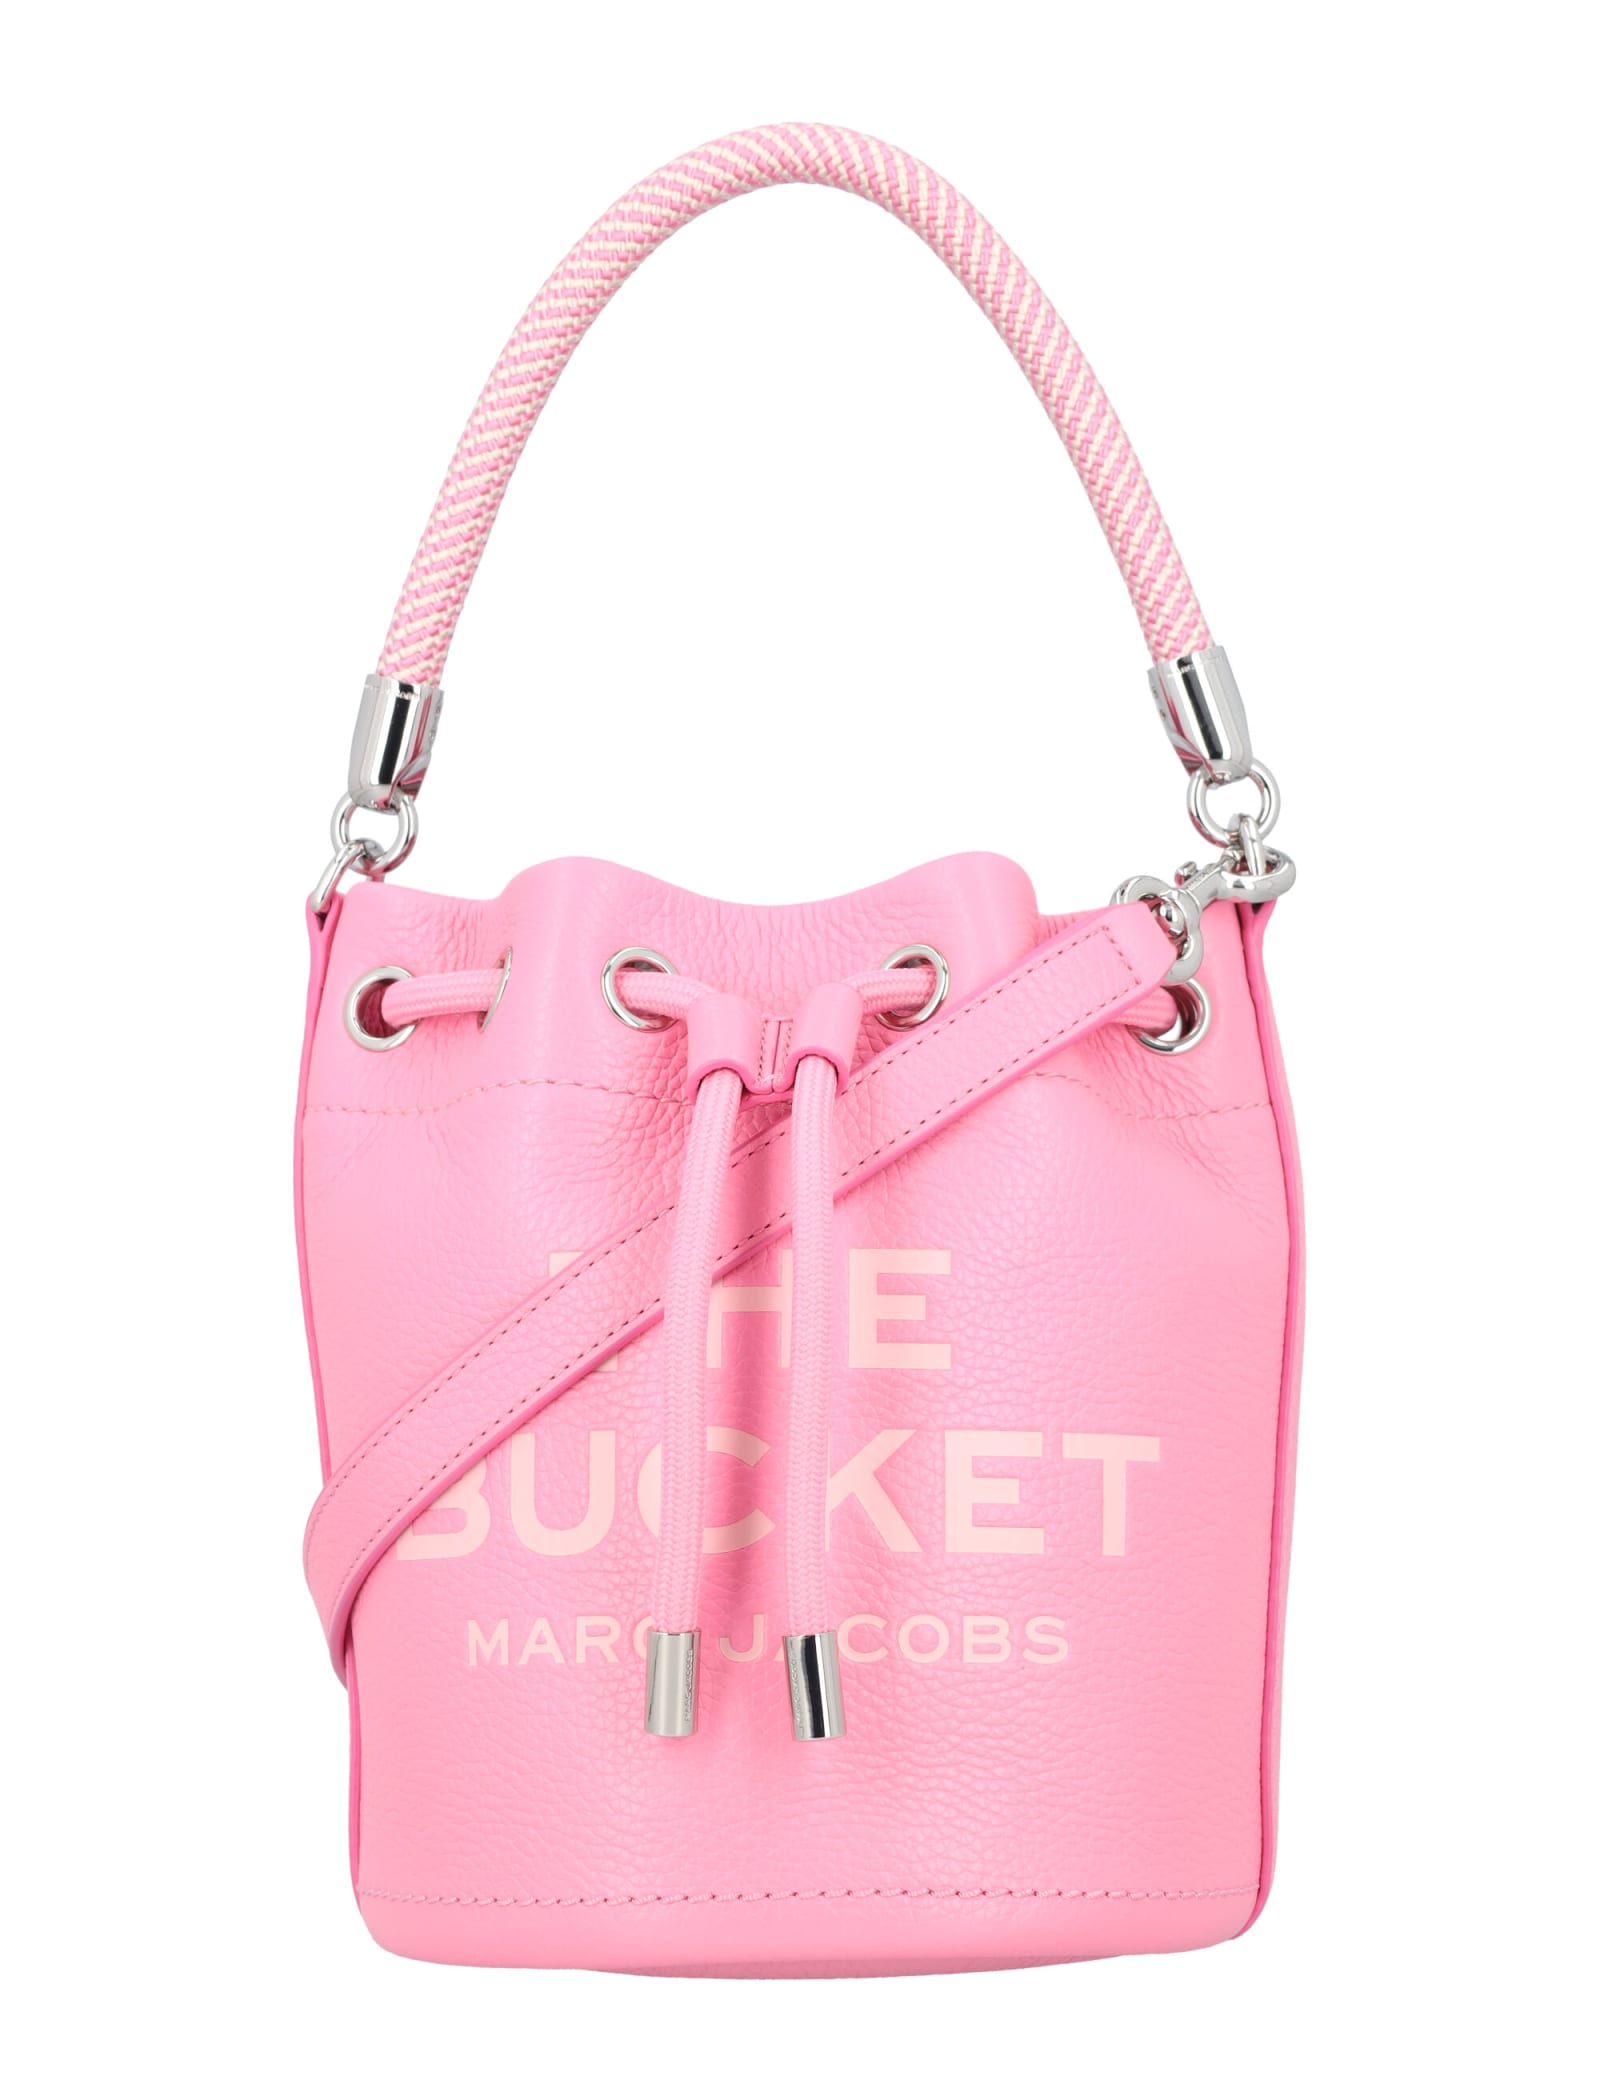 Marc Jacobs The Bucket Bag In Petal Pink